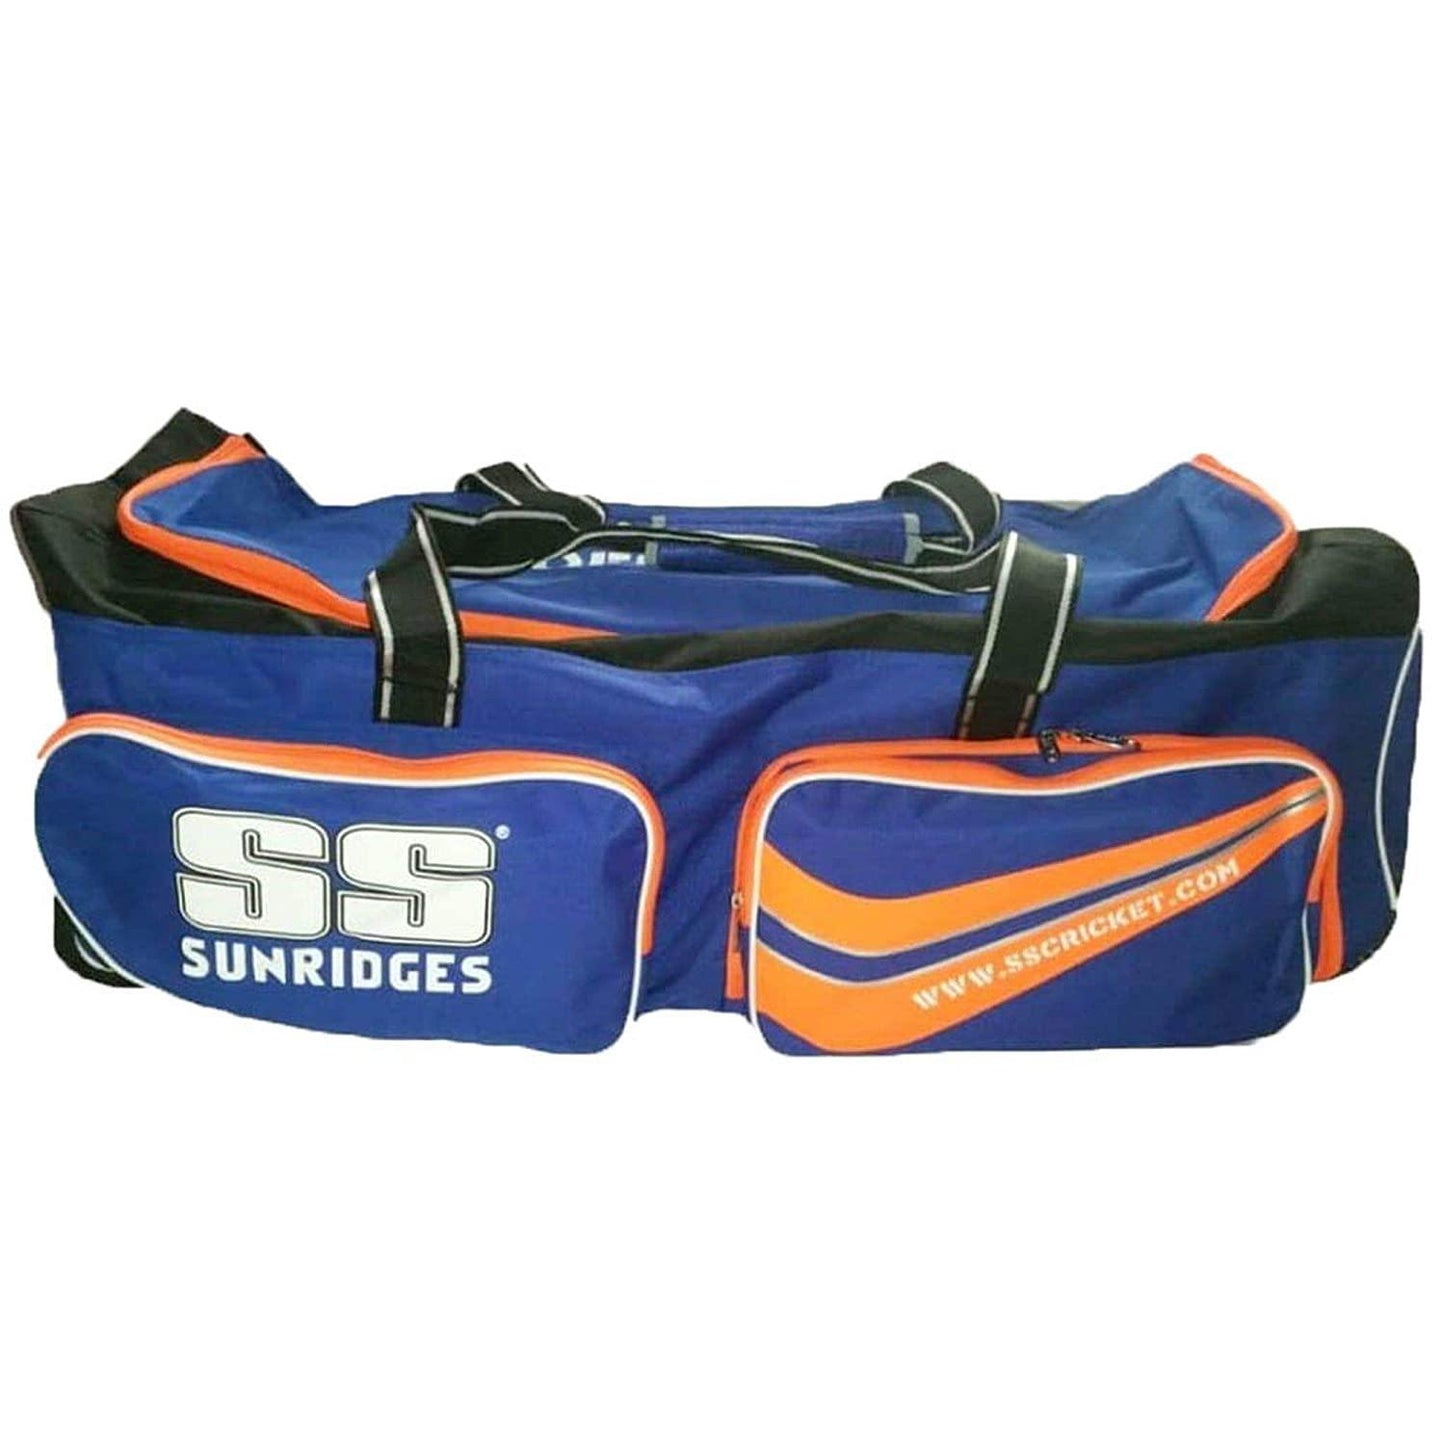 SS Professional Cricket Team Kitbag with Wheels - Blue/Orange - Best Price online Prokicksports.com